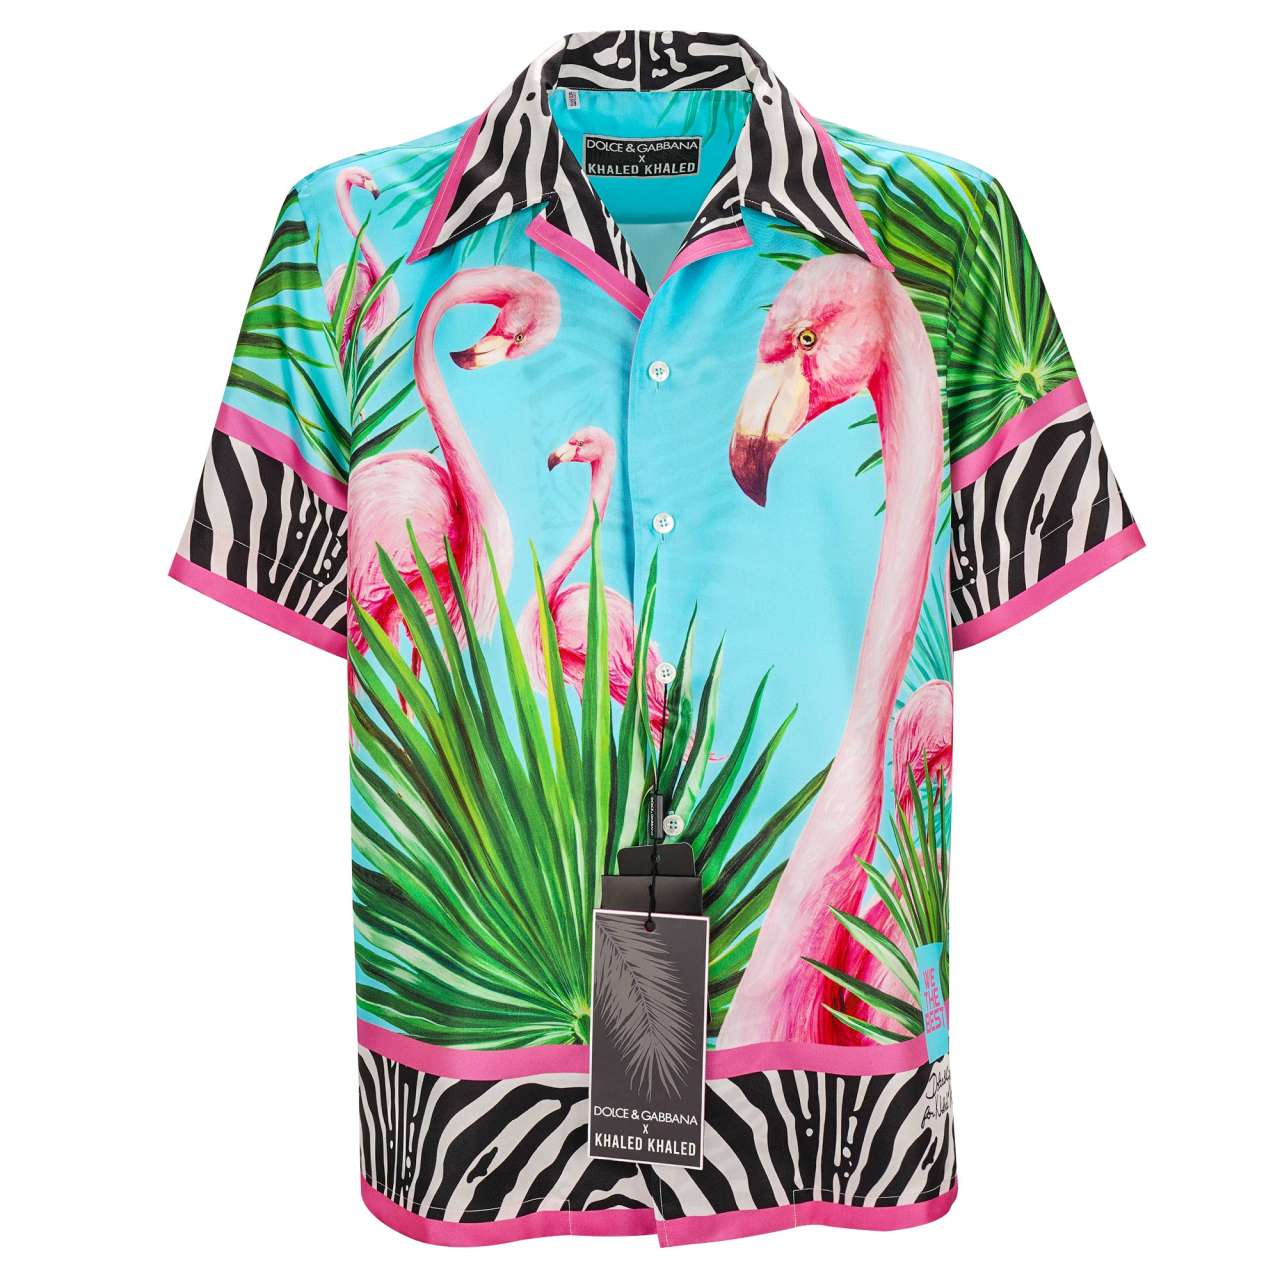 Dolce & Gabbana - DJ Khaled Silk Flamingo Zebra Shirt with Sunglasses and CD 41 For Sale